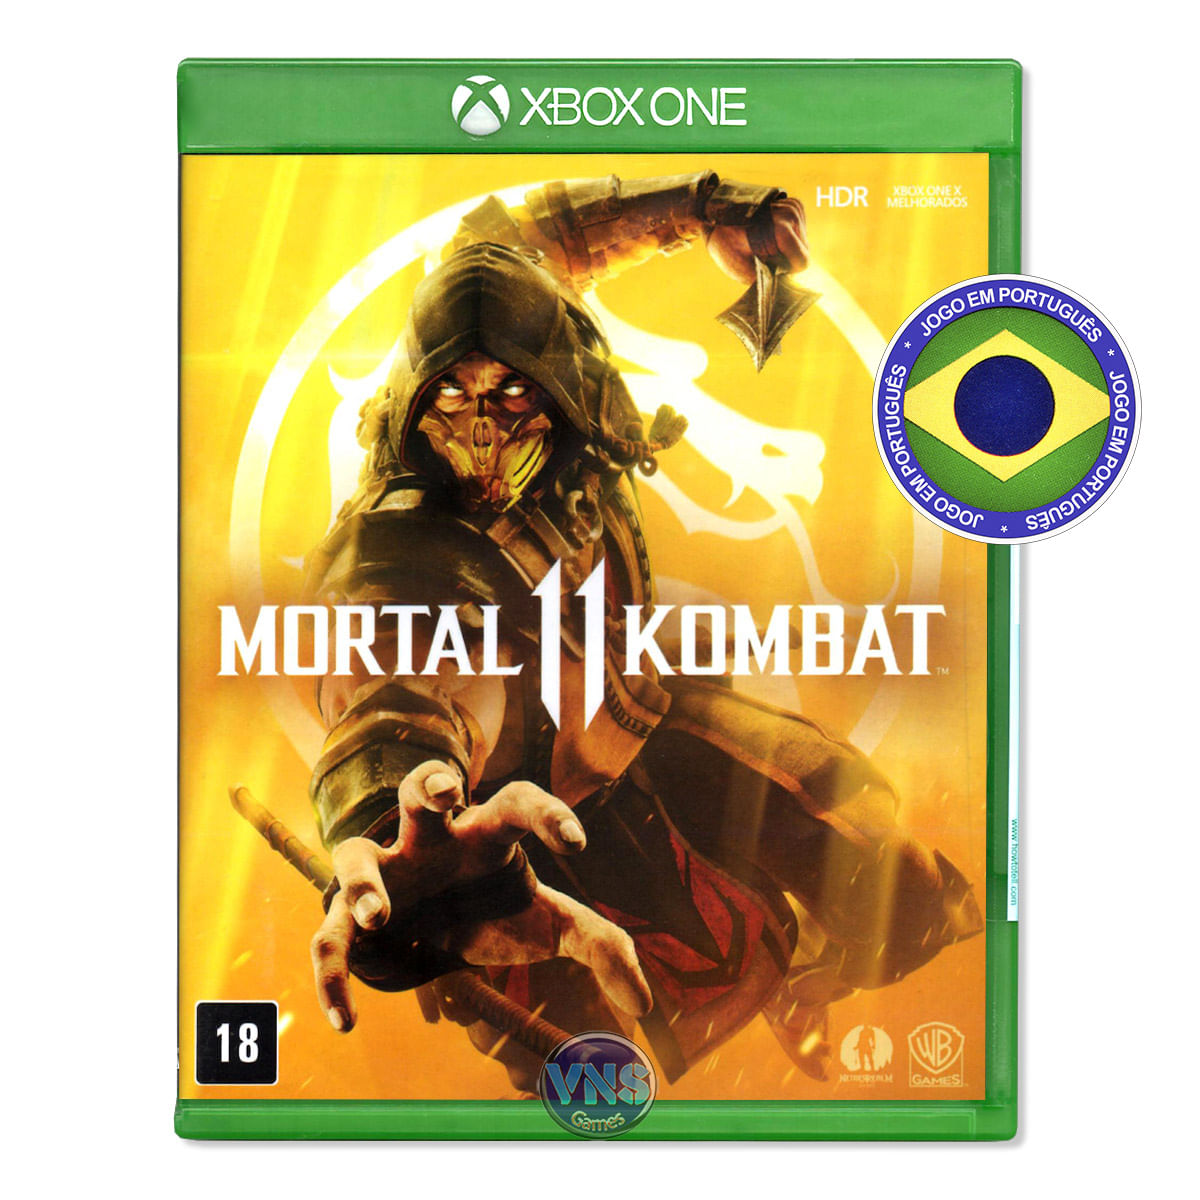 Mortal Kombat - Xbox 360 (Usado)